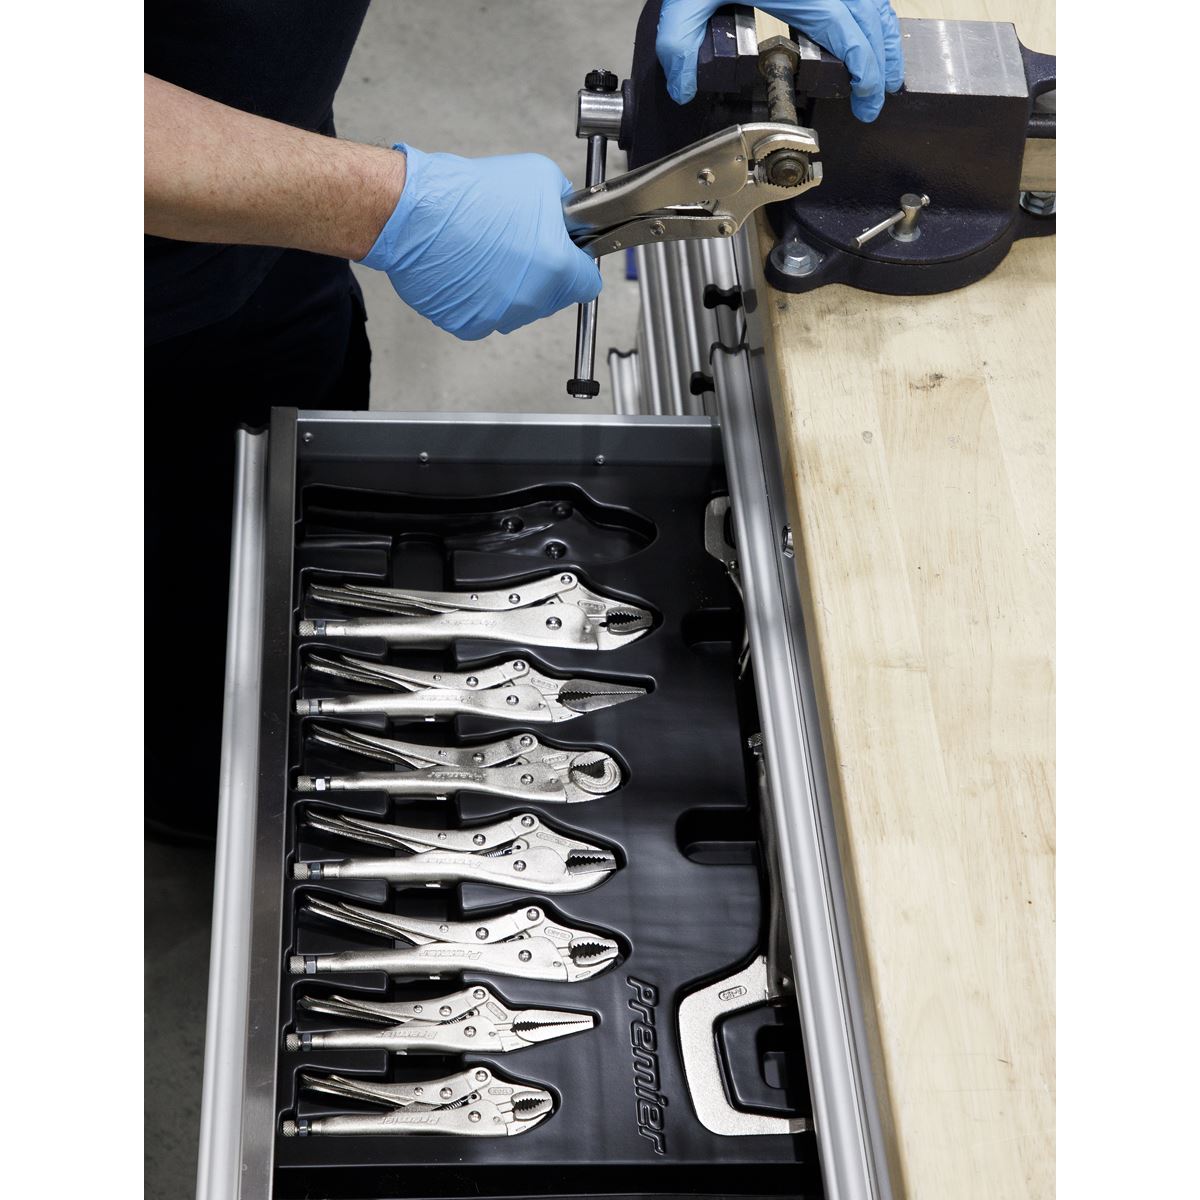 Sealey Premier Locking Pliers Set 10 Piece in Tray